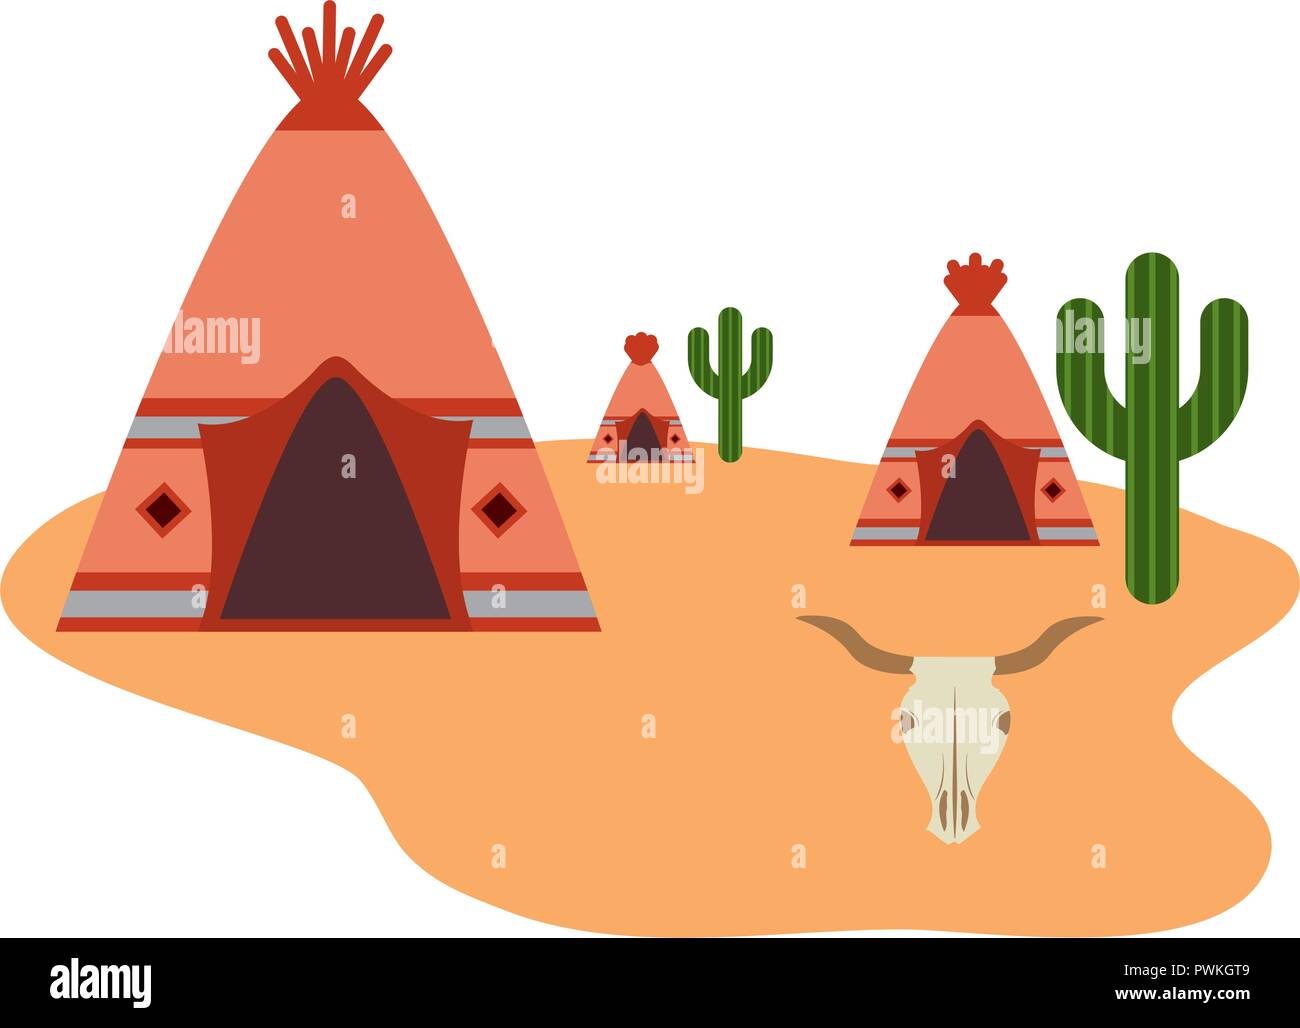 teepee community native american cactus desert vector illustration Stock Vector